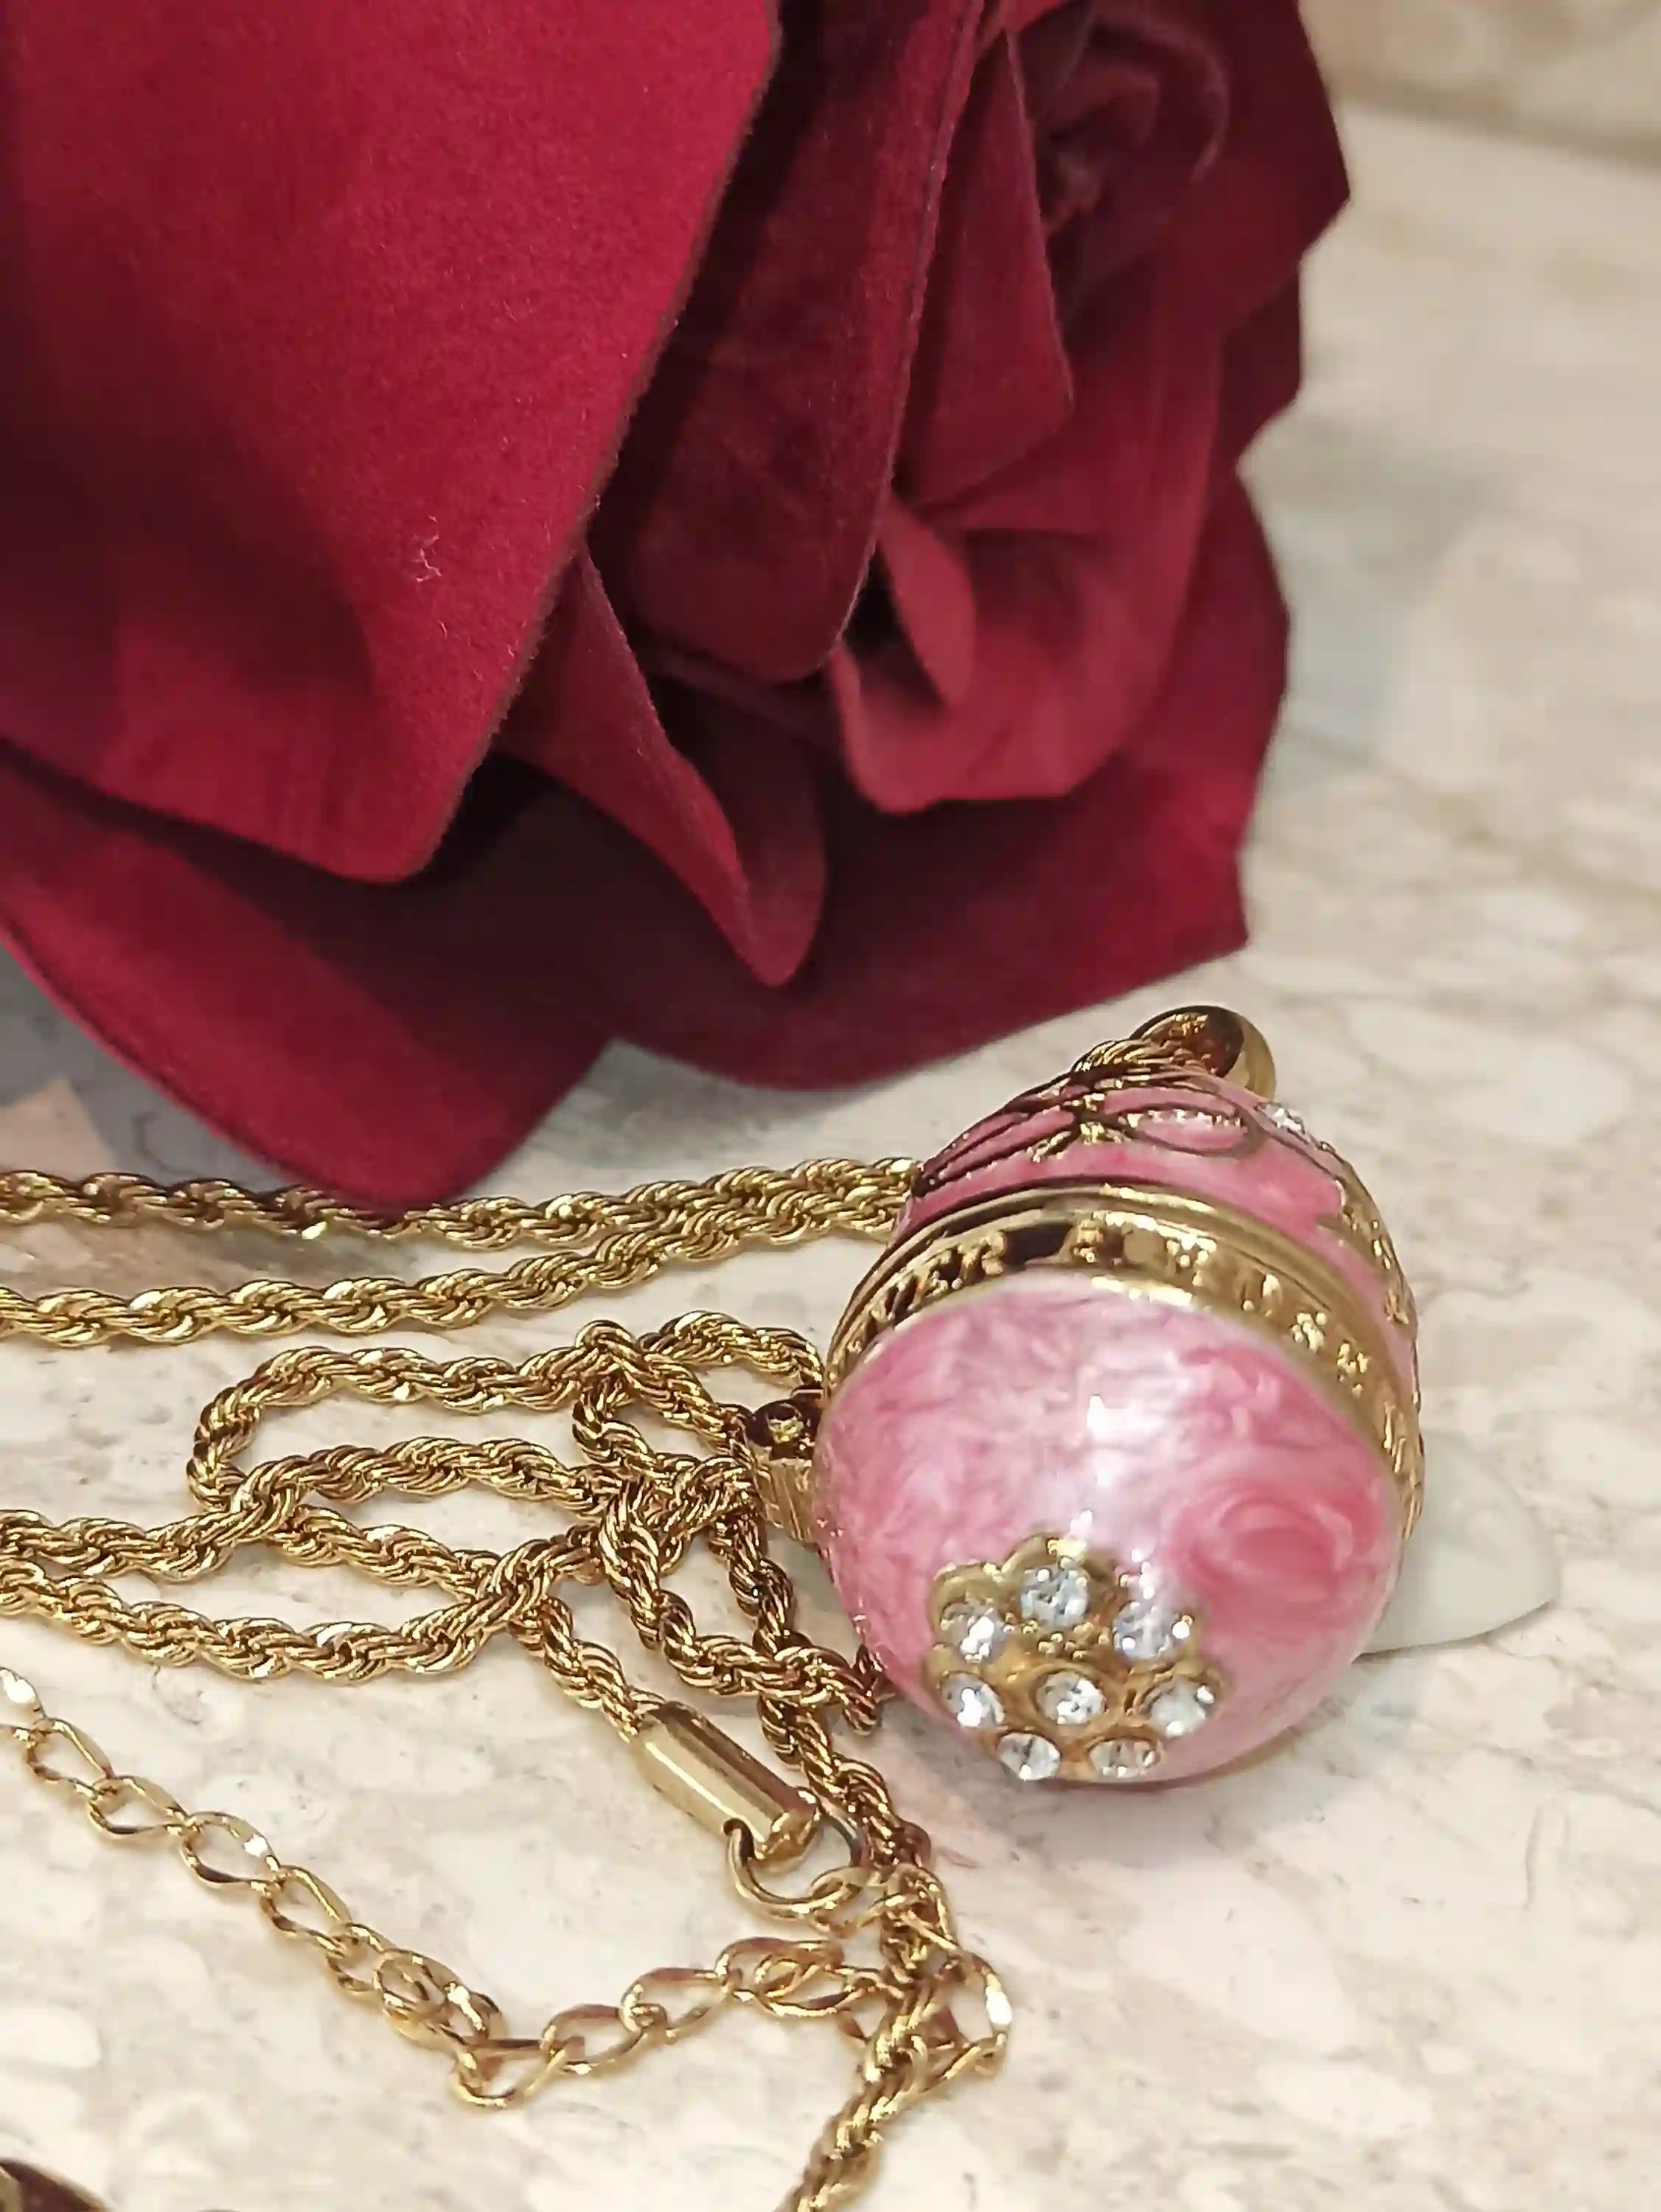 Luxurious Handmade Wedding Sterling Silver Jewelry SET Gift Faberge Egg Gold 24k Guilloche + Austrian Crystal DIAMOND Handset Pink Topaz SET 